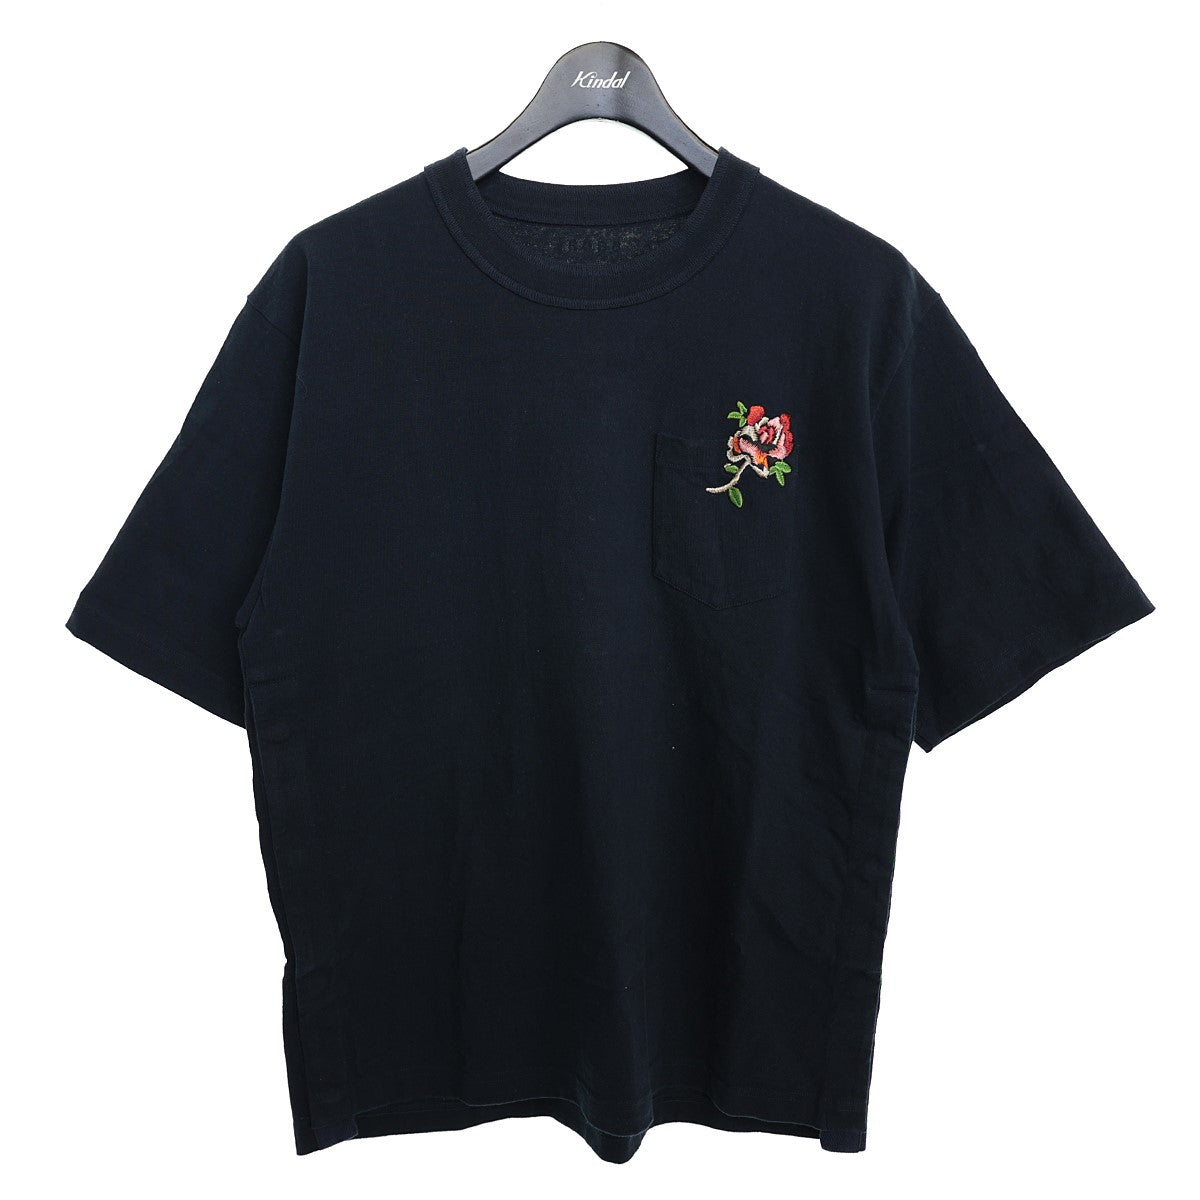 sacai(サカイ) サイドスナップボタンTシャツ Flower Embroidery T-Shirt 22-02868M ダークネイビー サイズ  13｜【公式】カインドオルオンライン ブランド古着・中古通販【kindal】